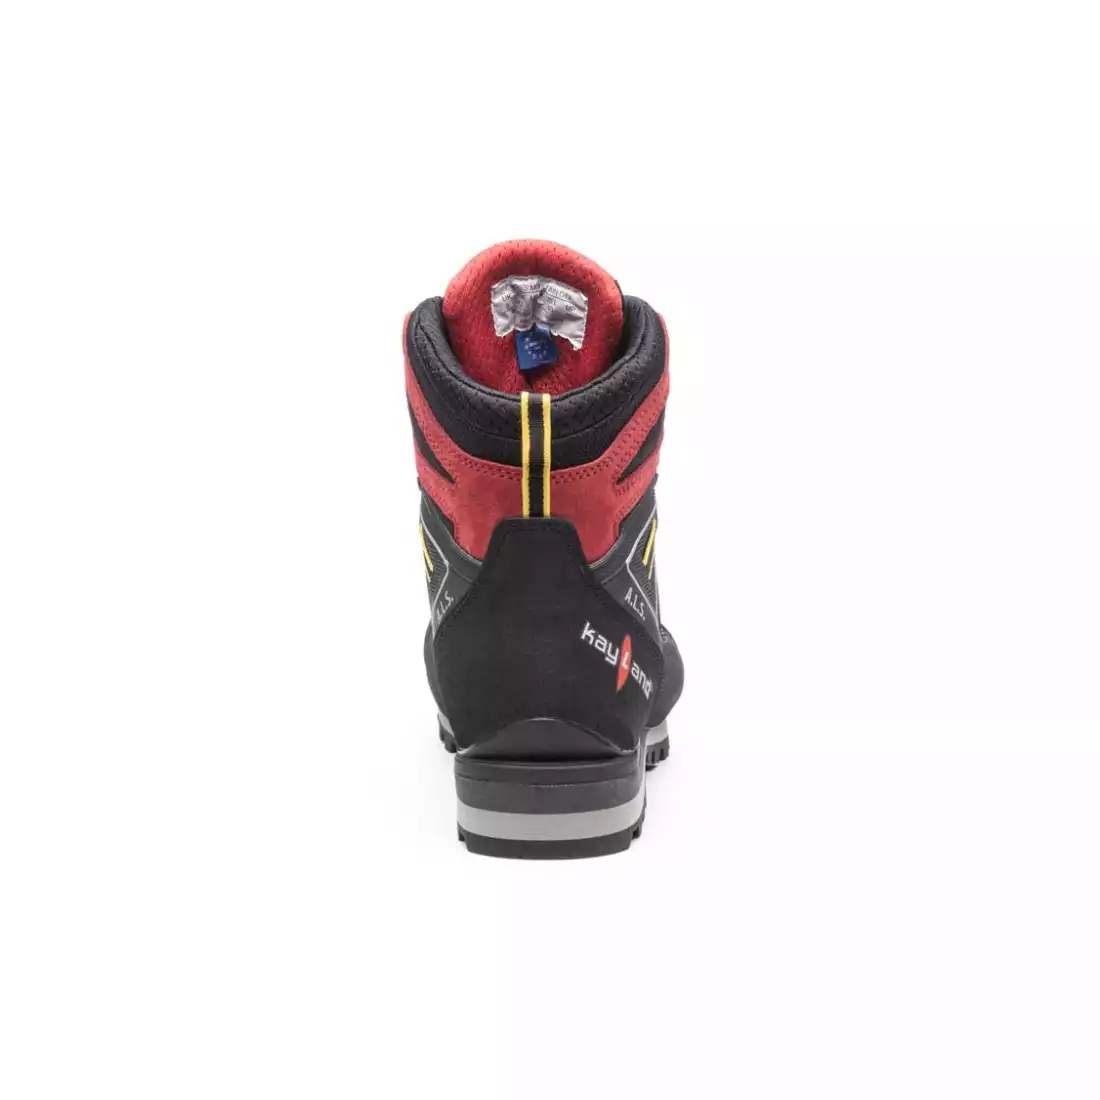 KAYLAND CROSS MOUNTAIN GTX Pánské trekové boty, GORE-TEX, VIBRAM, černá a červená